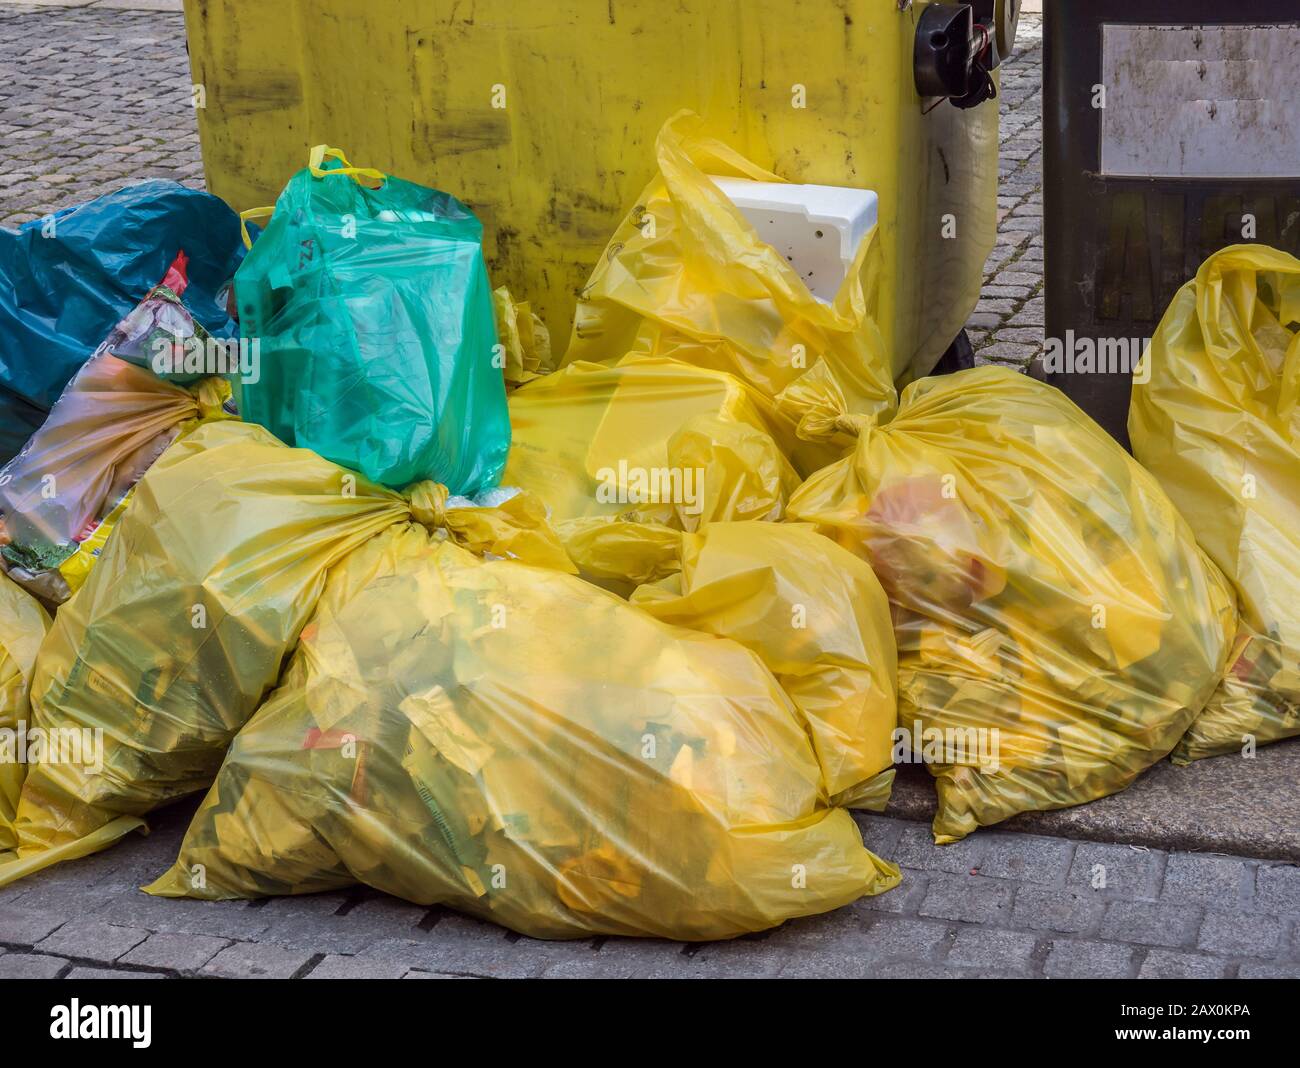 https://c8.alamy.com/comp/2AX0KPA/yellow-bags-full-of-plastic-waste-2AX0KPA.jpg